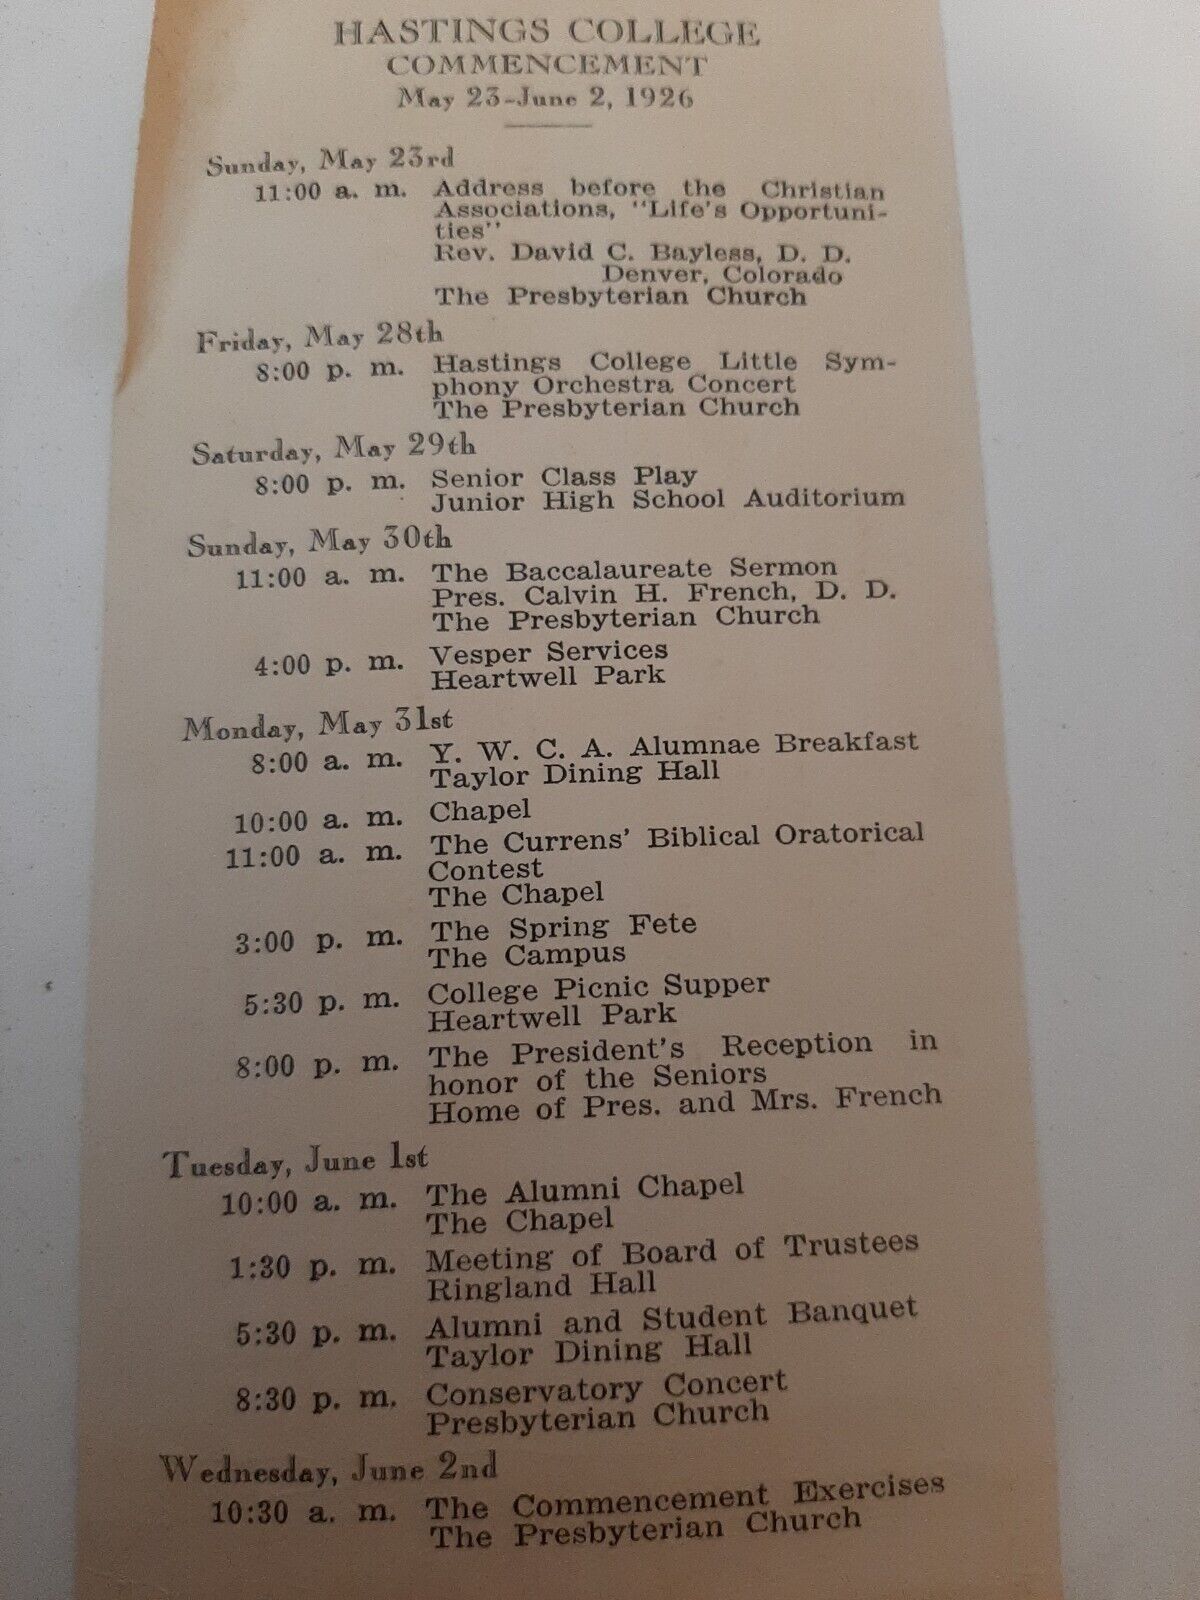 Hastings College in Nebraska Commencement 1926 schedule of events